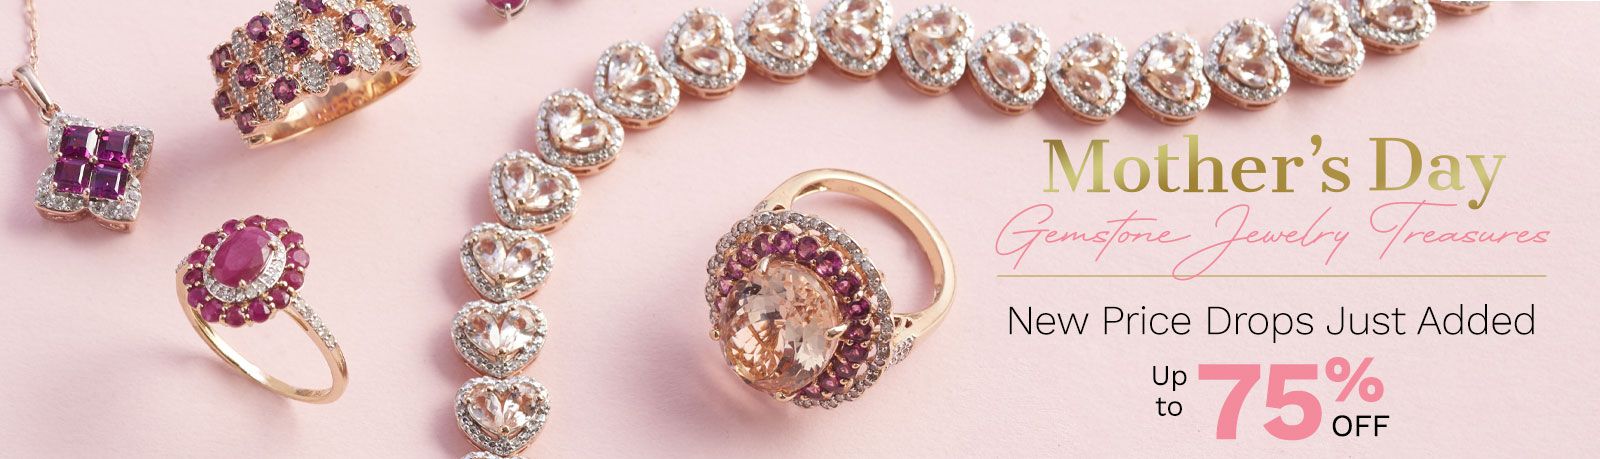 Mothers Day Gemstone Jewelry Flash Sale 205-831, 205-828, 204-922, 204-923, 205-017, 205-005